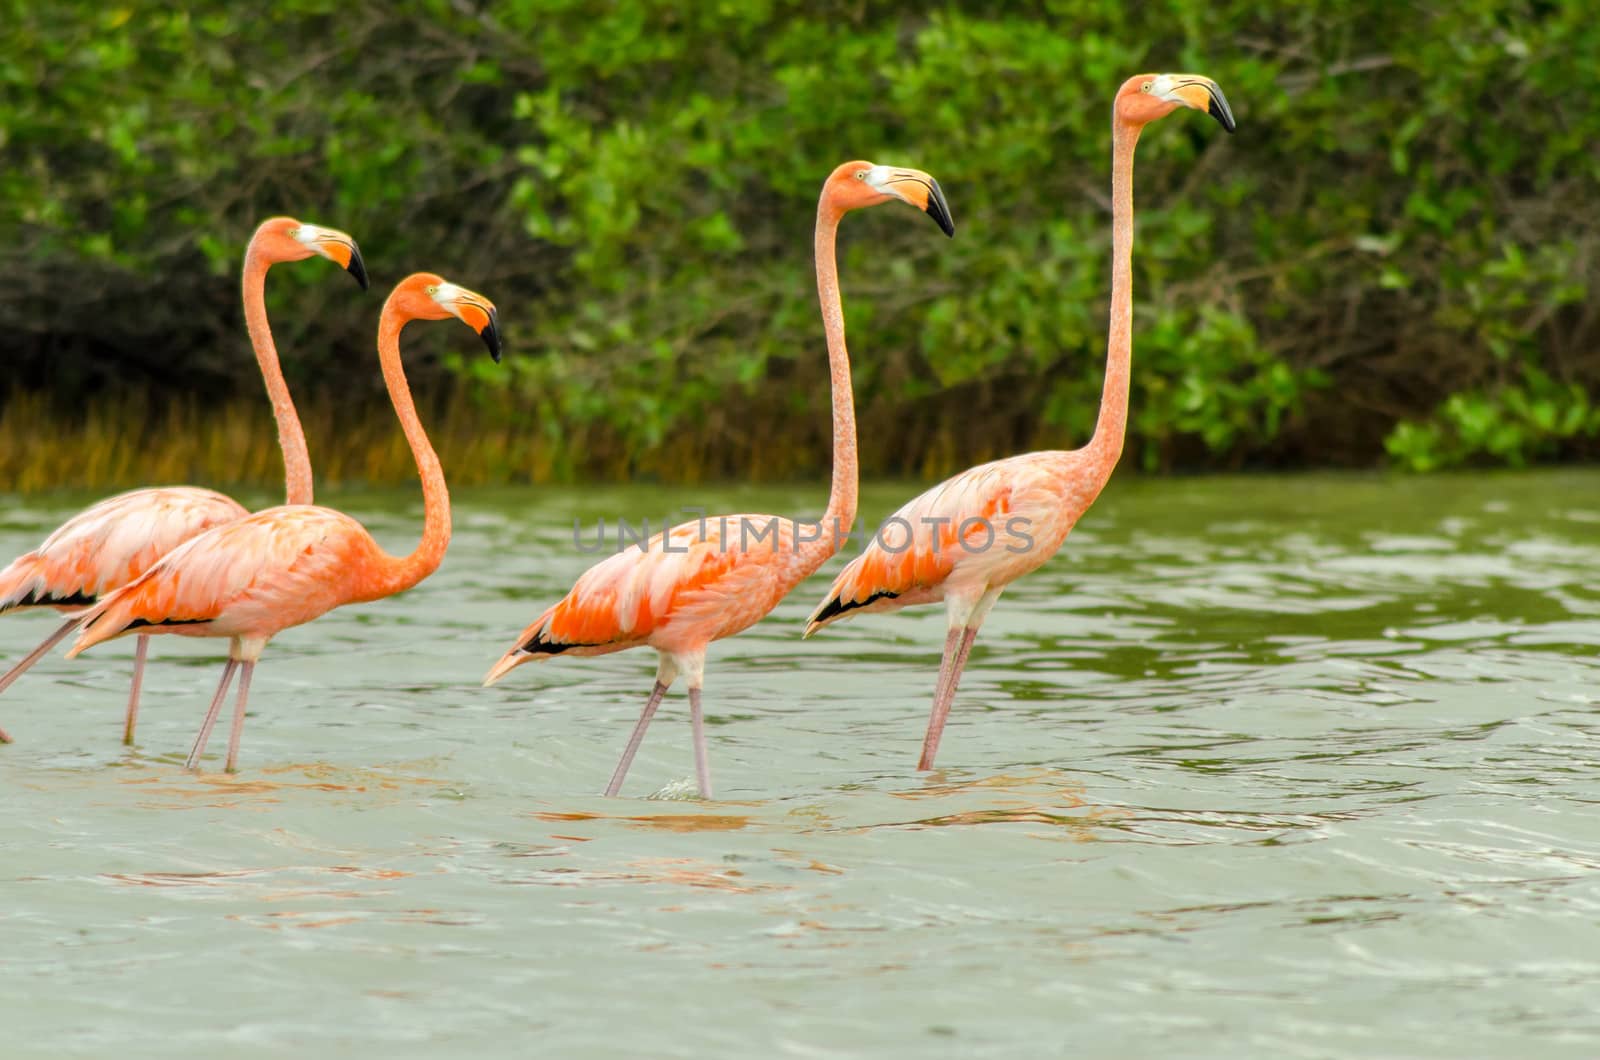 Four flamingos walking in shallow water in Camarones in La Guajira, Colombia